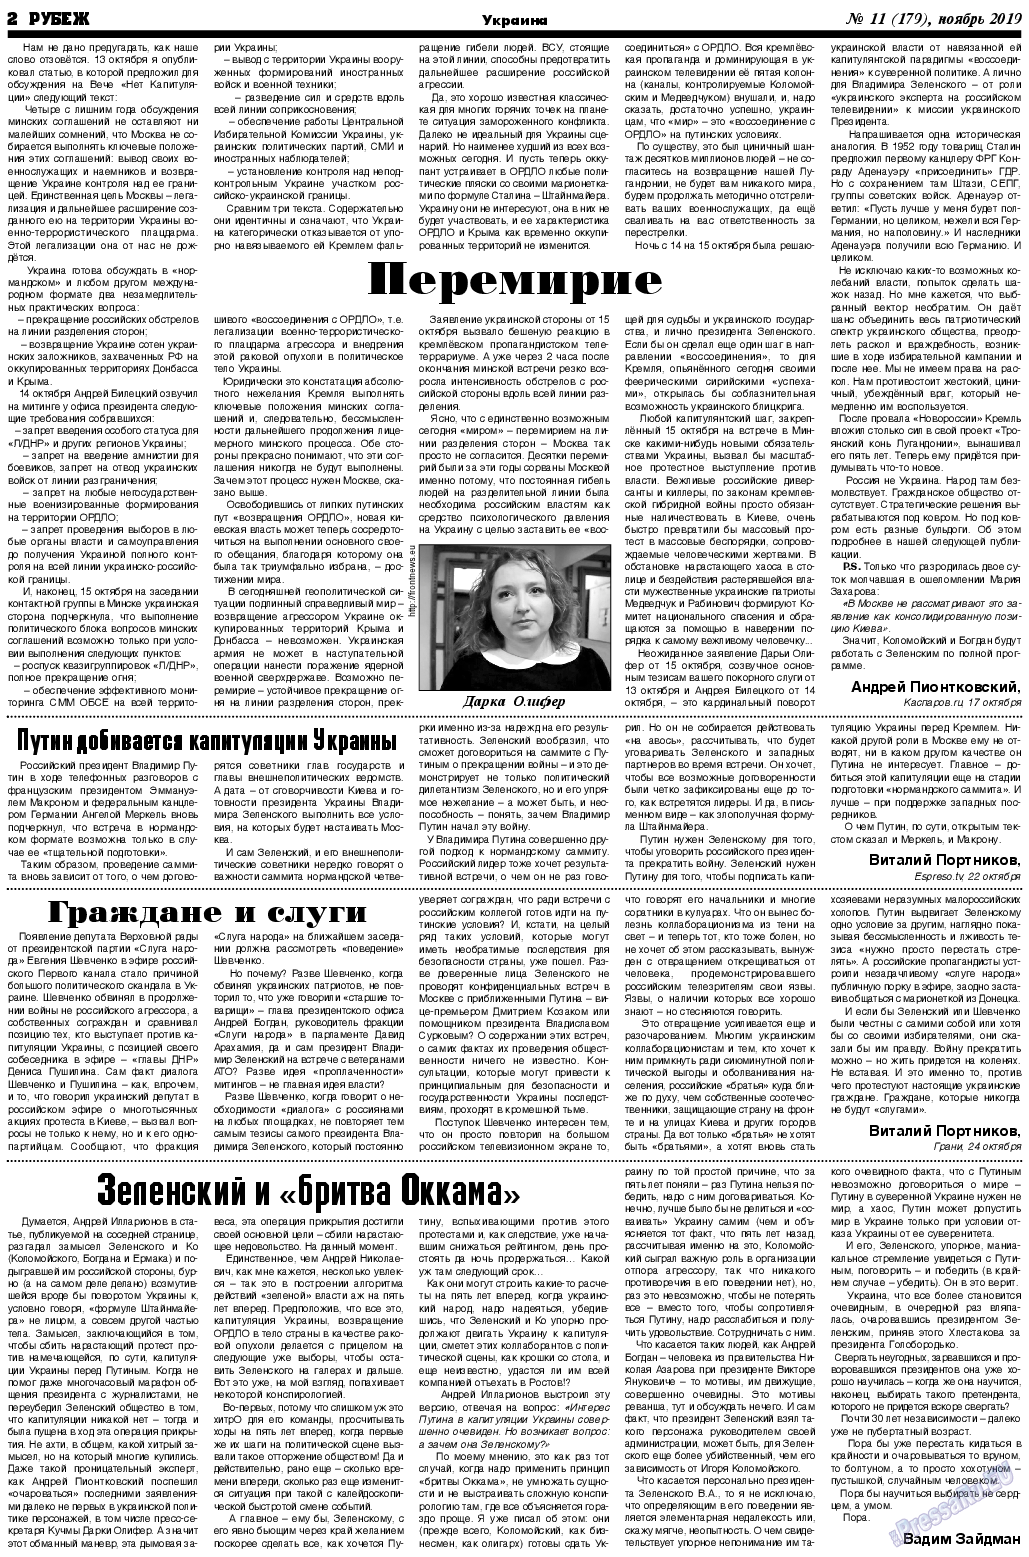 Рубеж, газета. 2019 №11 стр.2